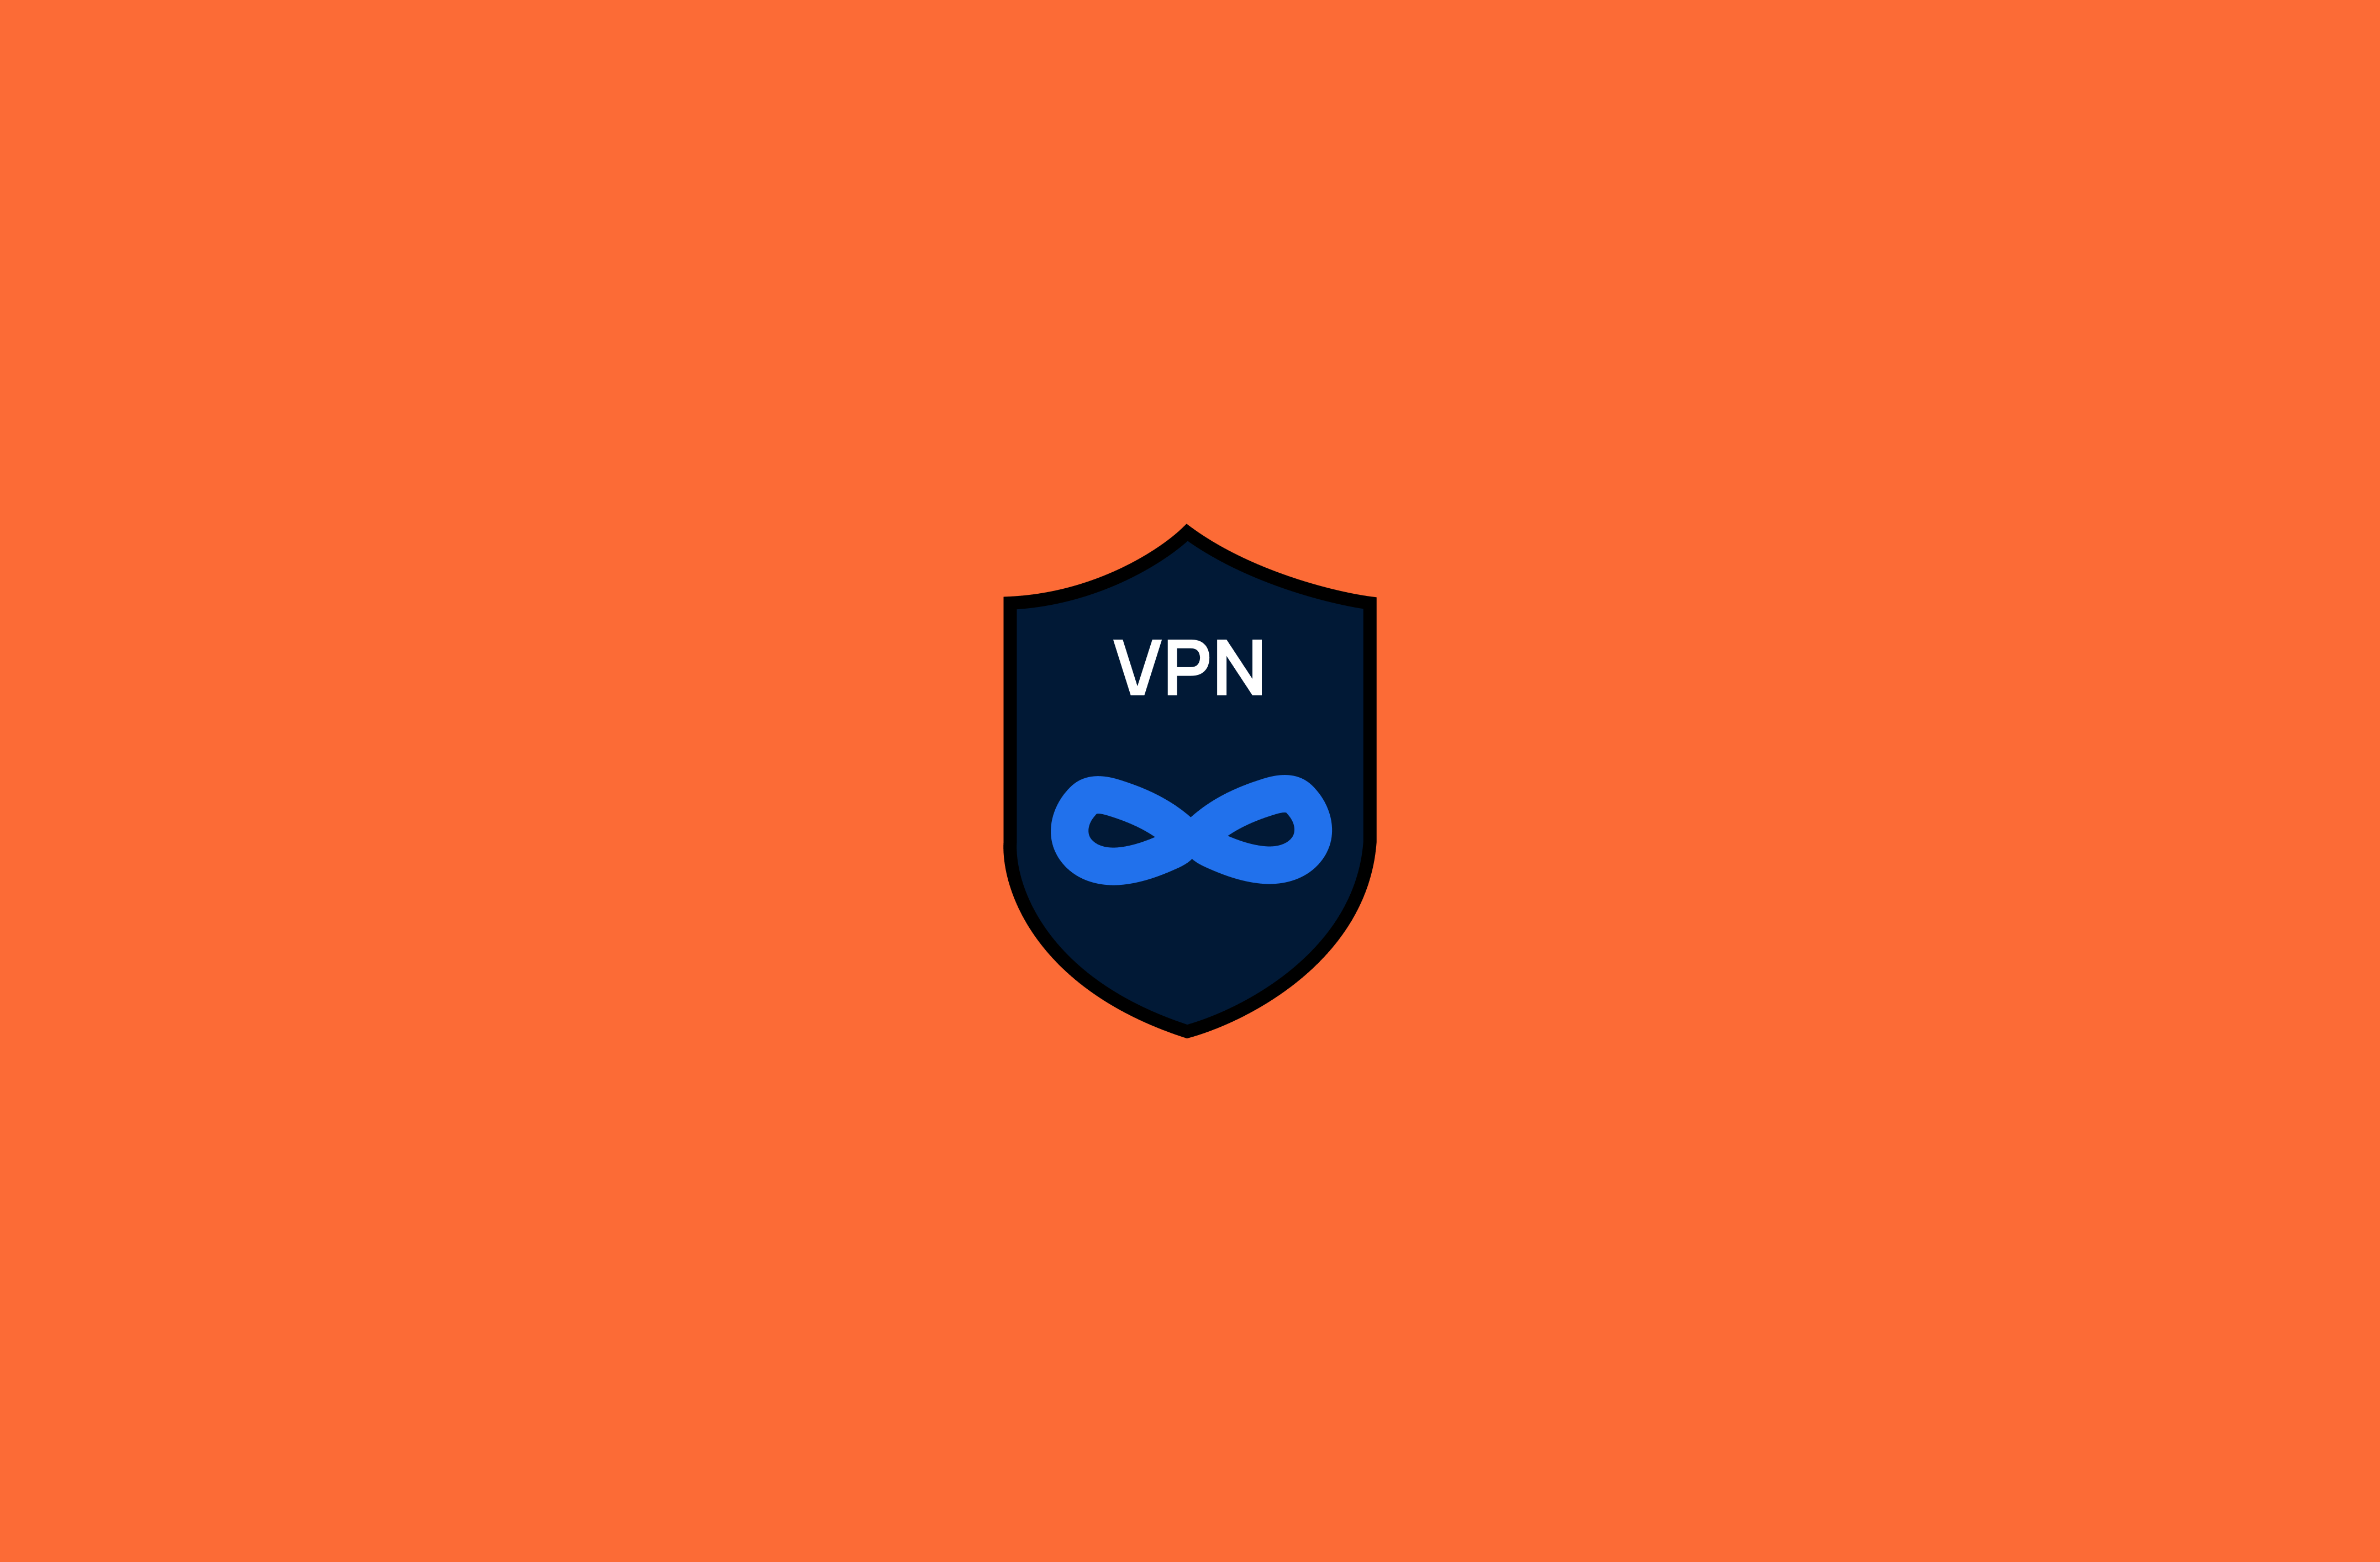 always enable a VPN